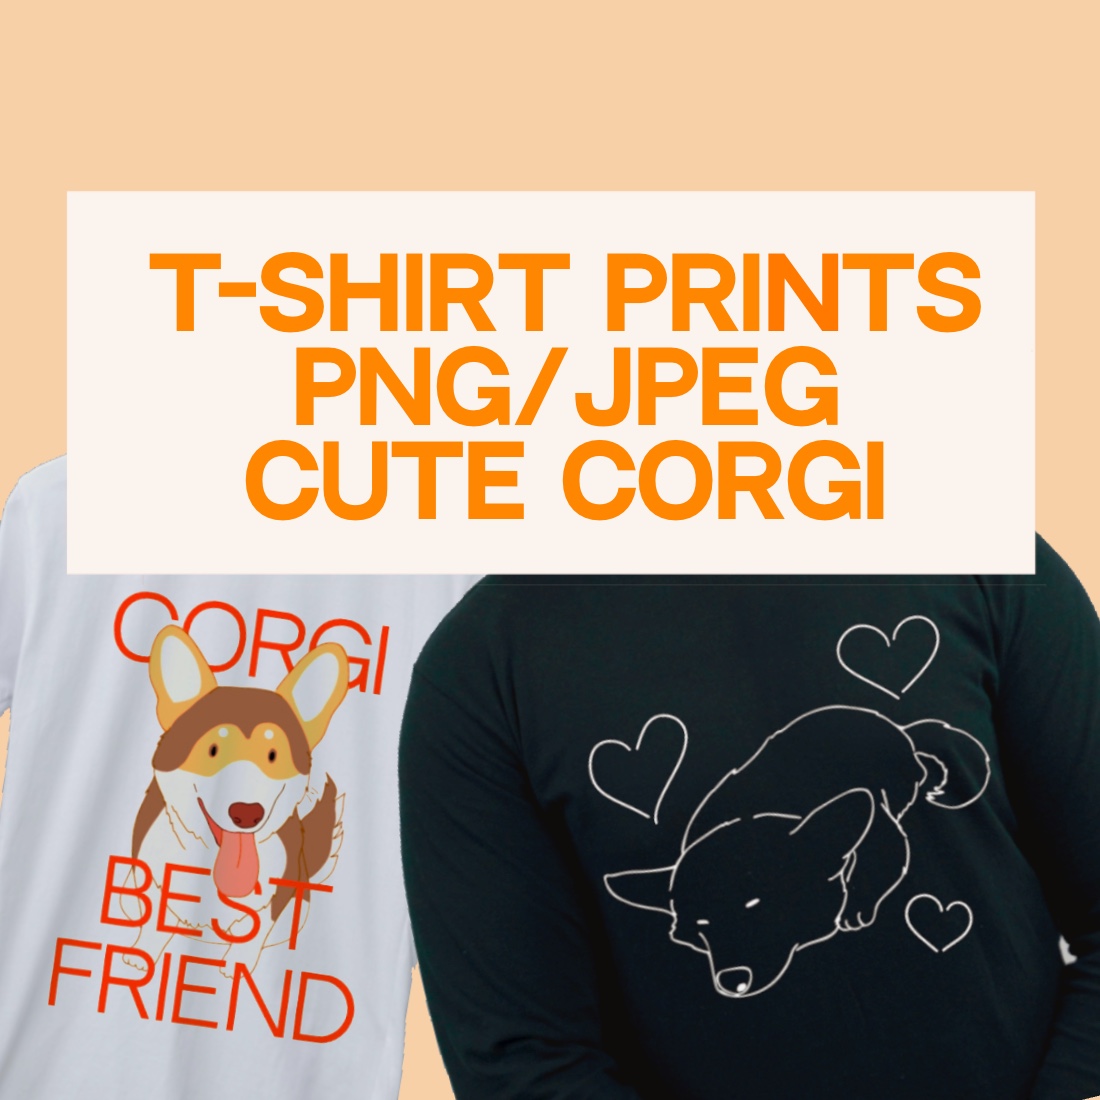 Amazing Corgi T-shirt Design cover image.